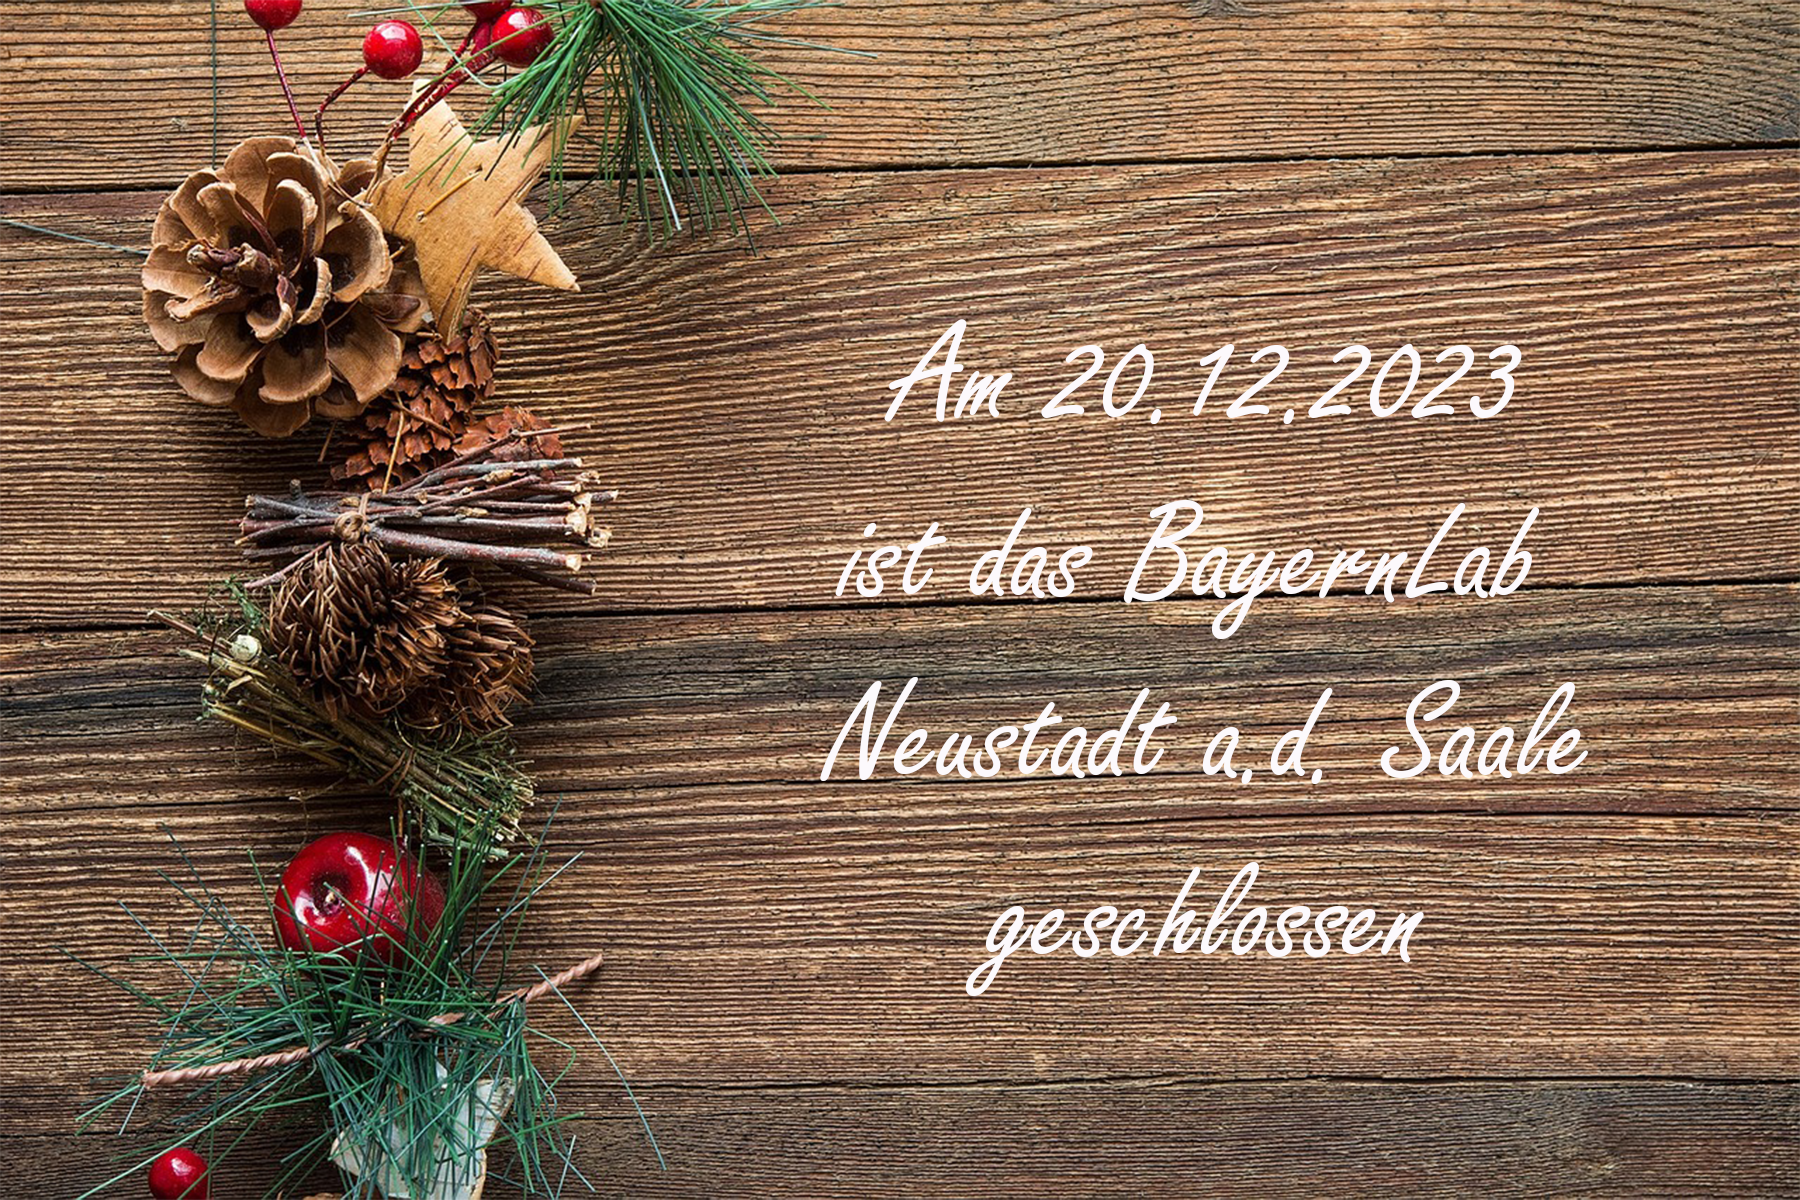 Das BayernLab ist am 20.12.2023 geschlossen